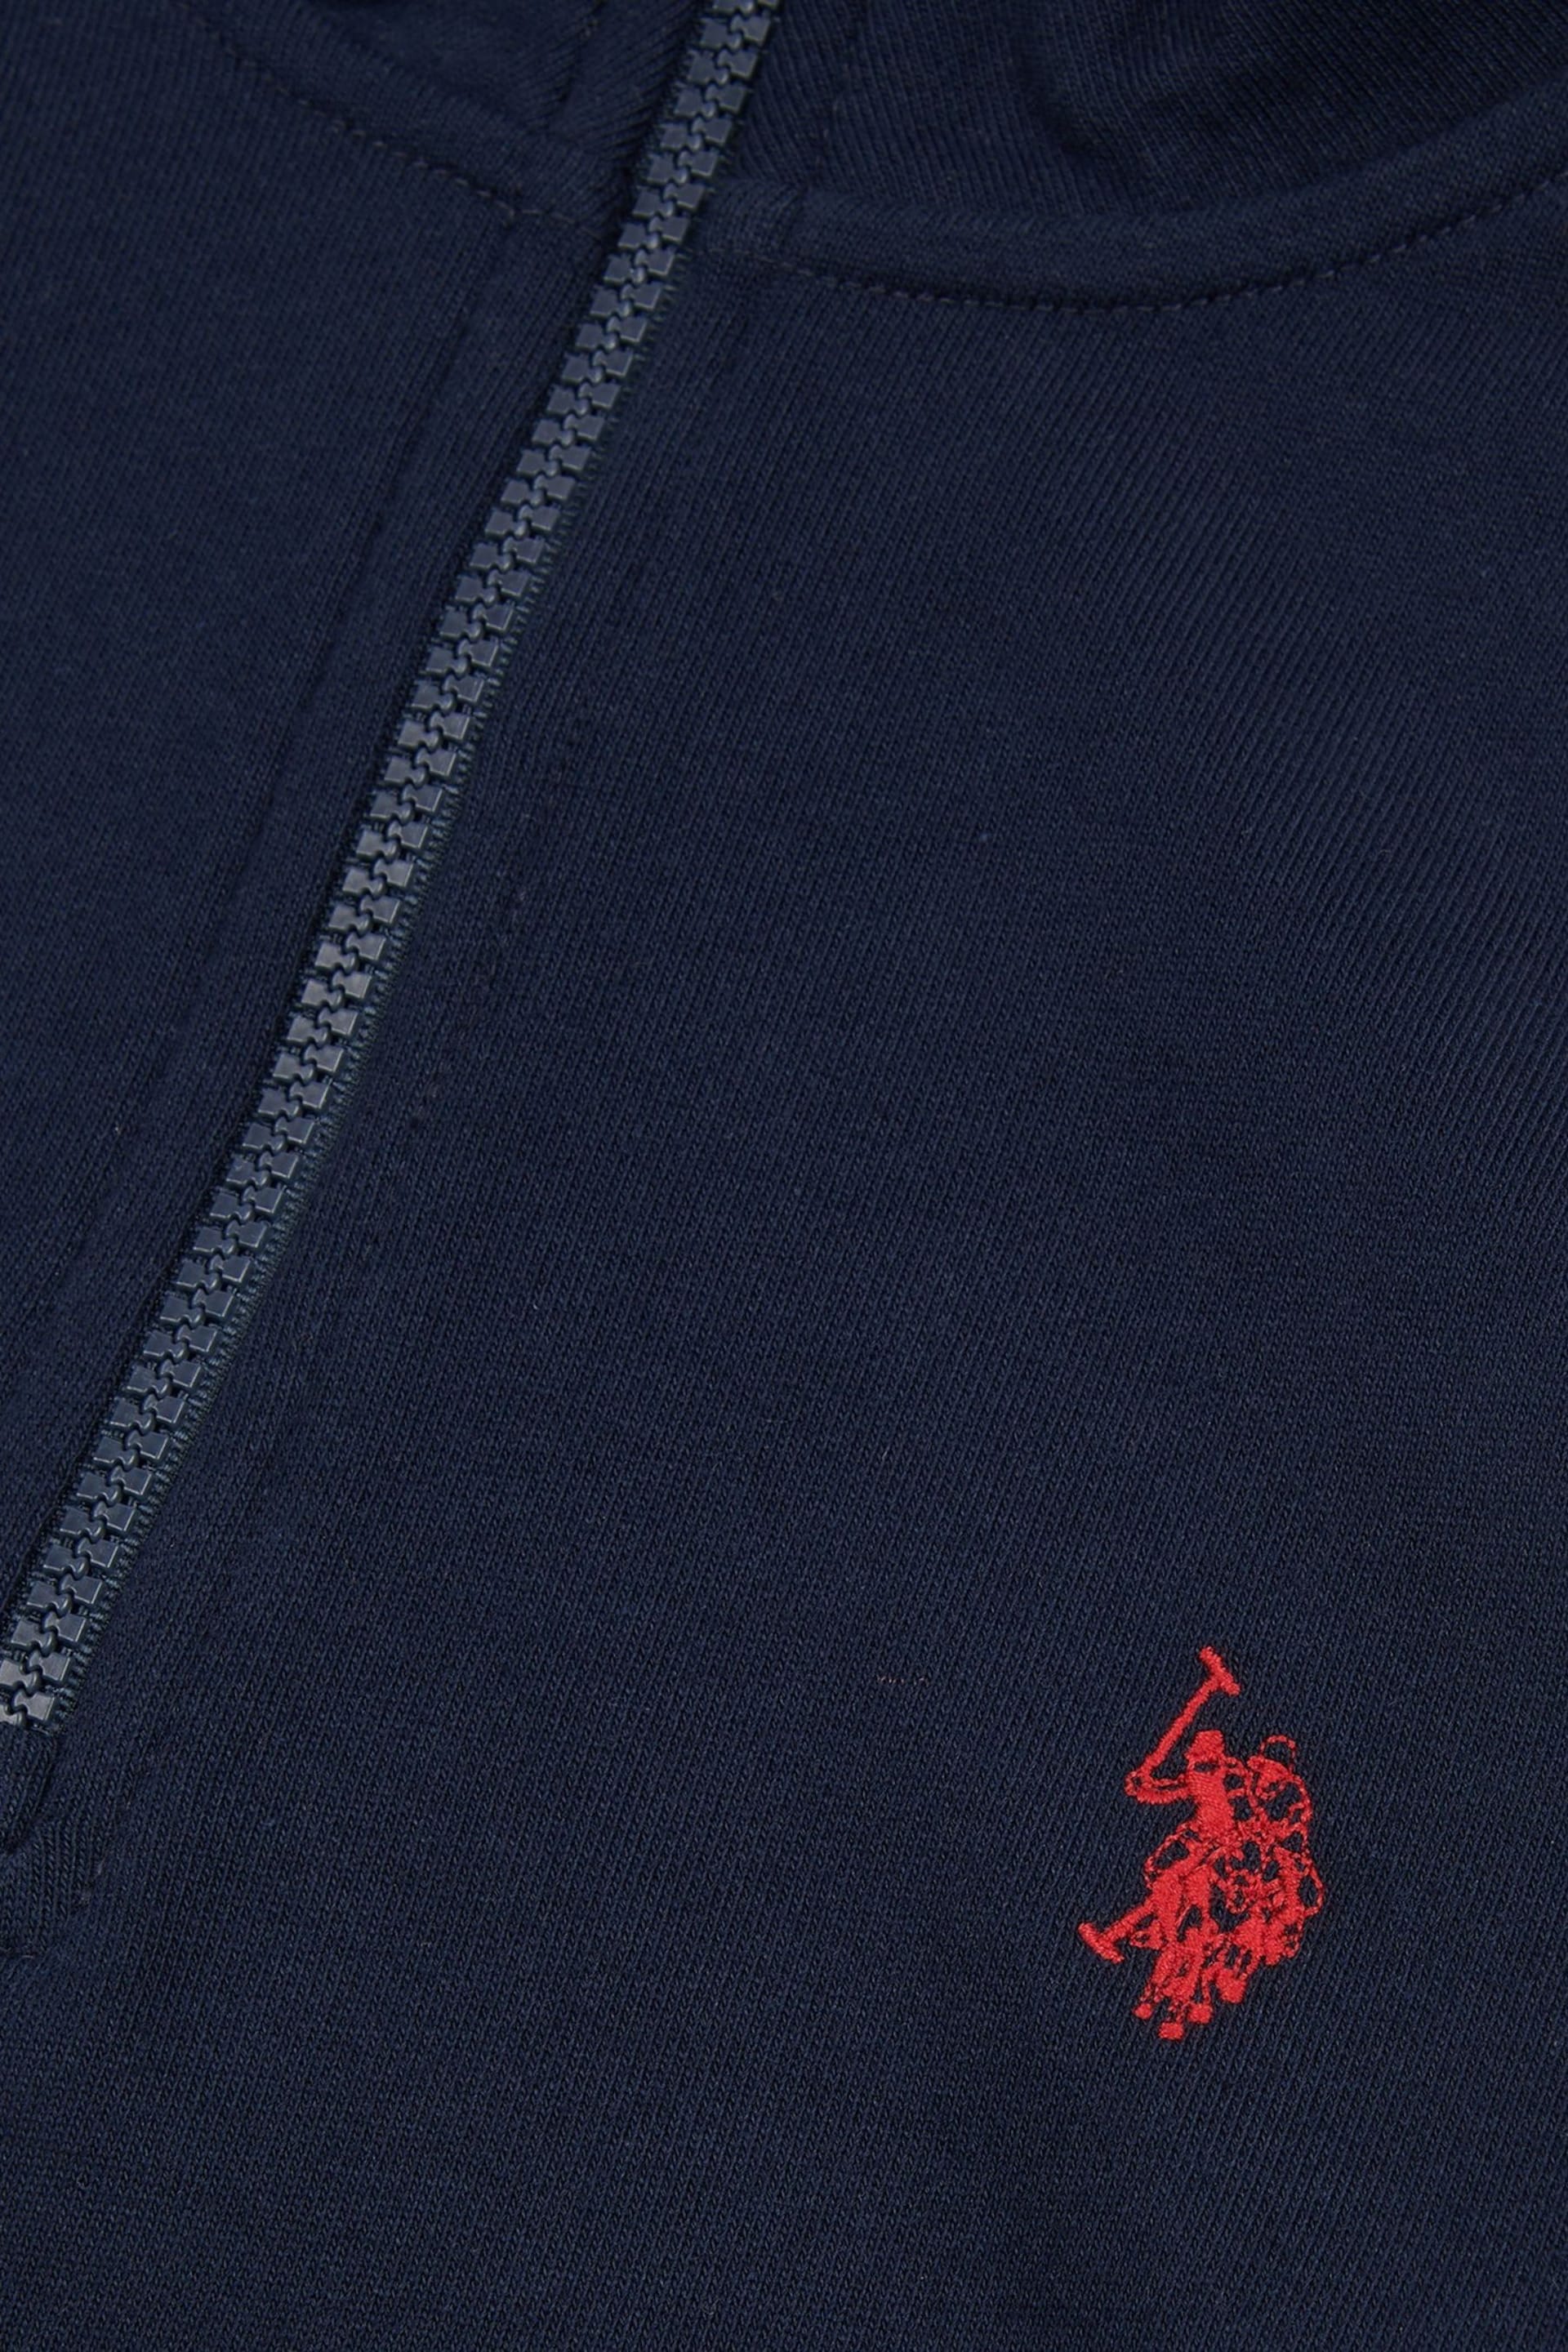 U.S. Polo Assn. Mens Classic Fit 1/4 Zip Sweatshirt - Image 7 of 7